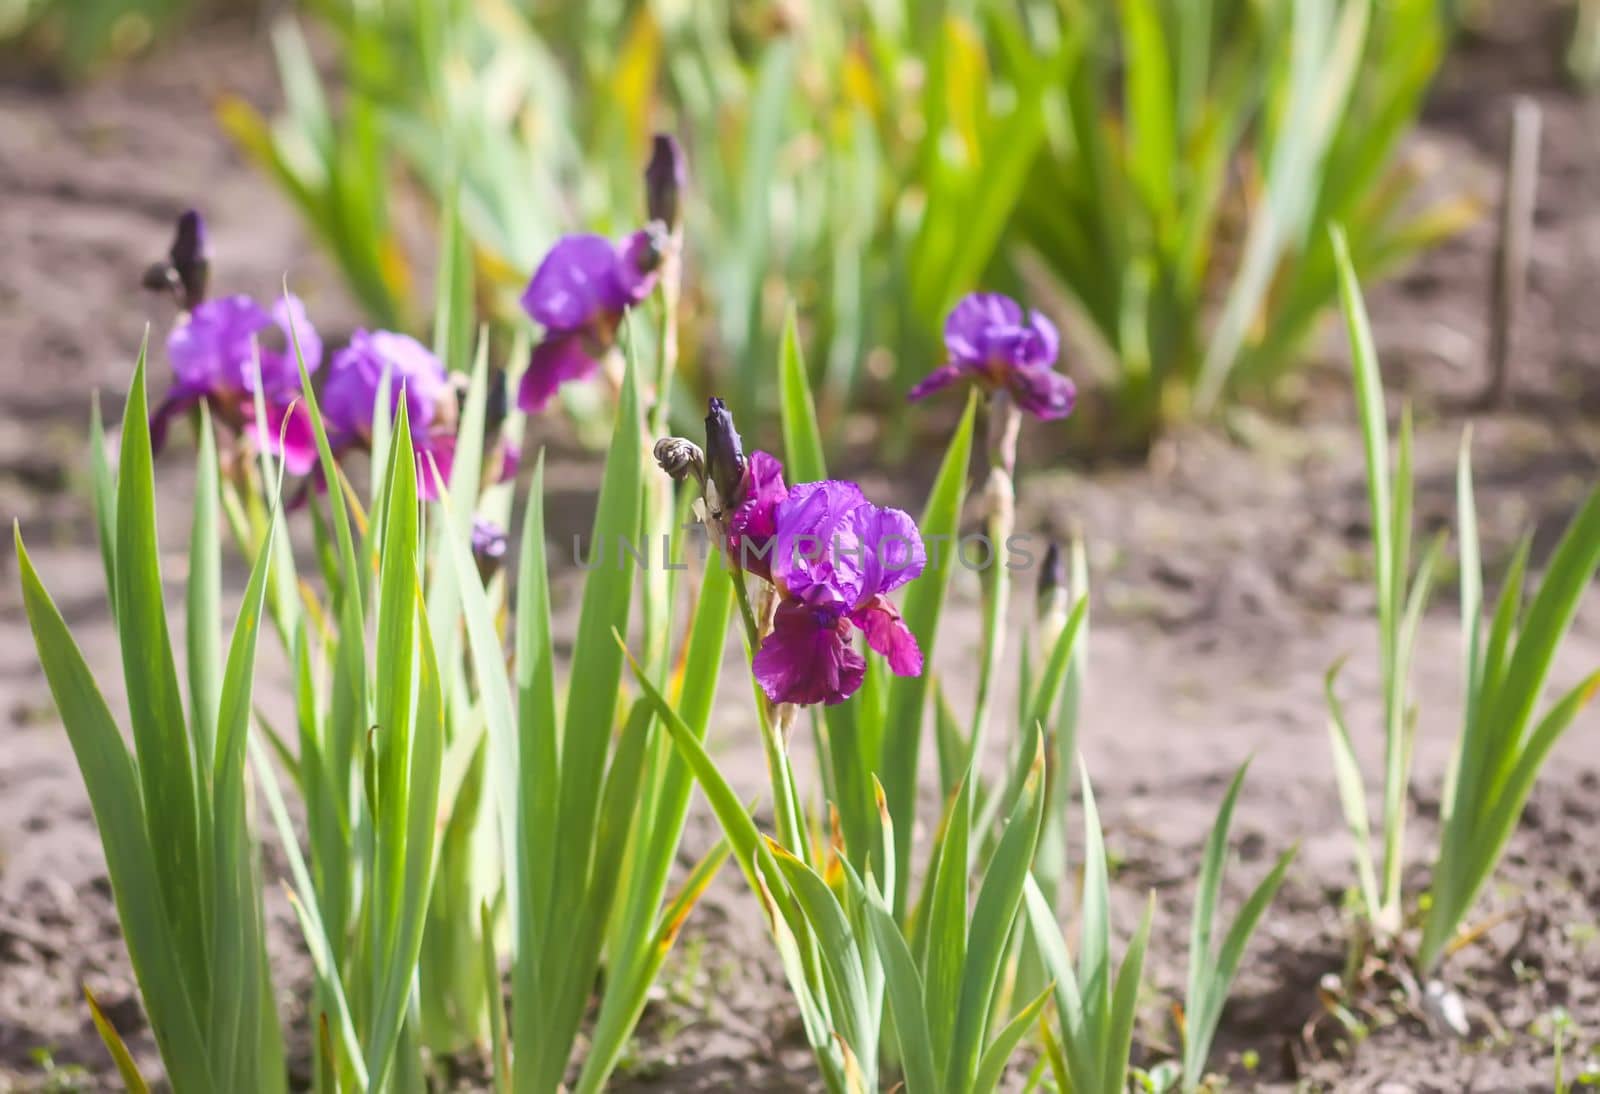 Iris flowers in spring garden. by nightlyviolet